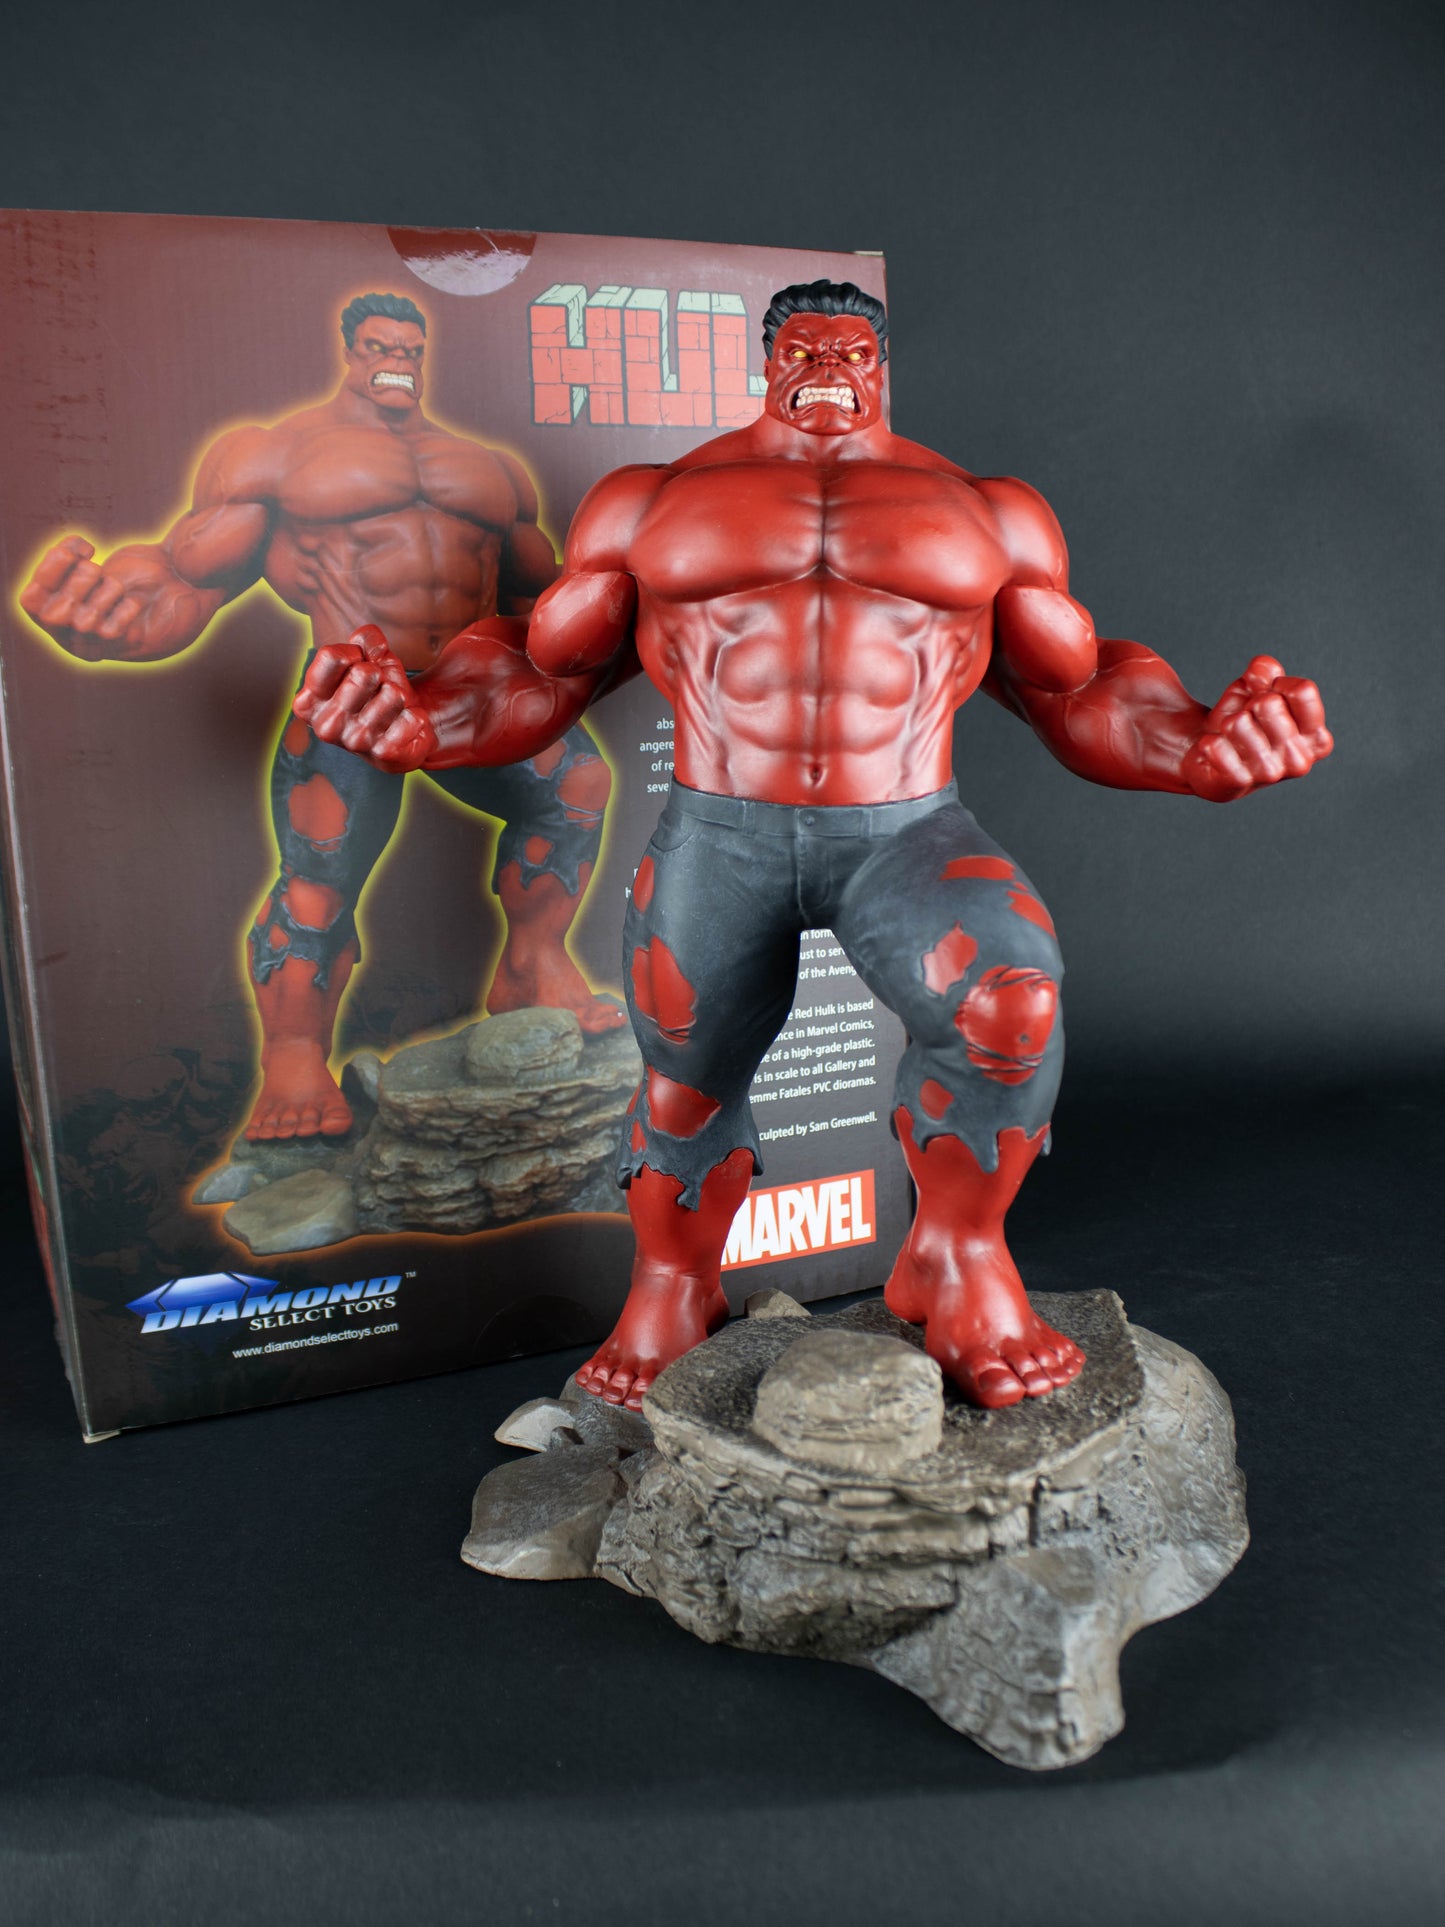 Diamond Select Toys Marvel Gallery Hulk PVC Figure